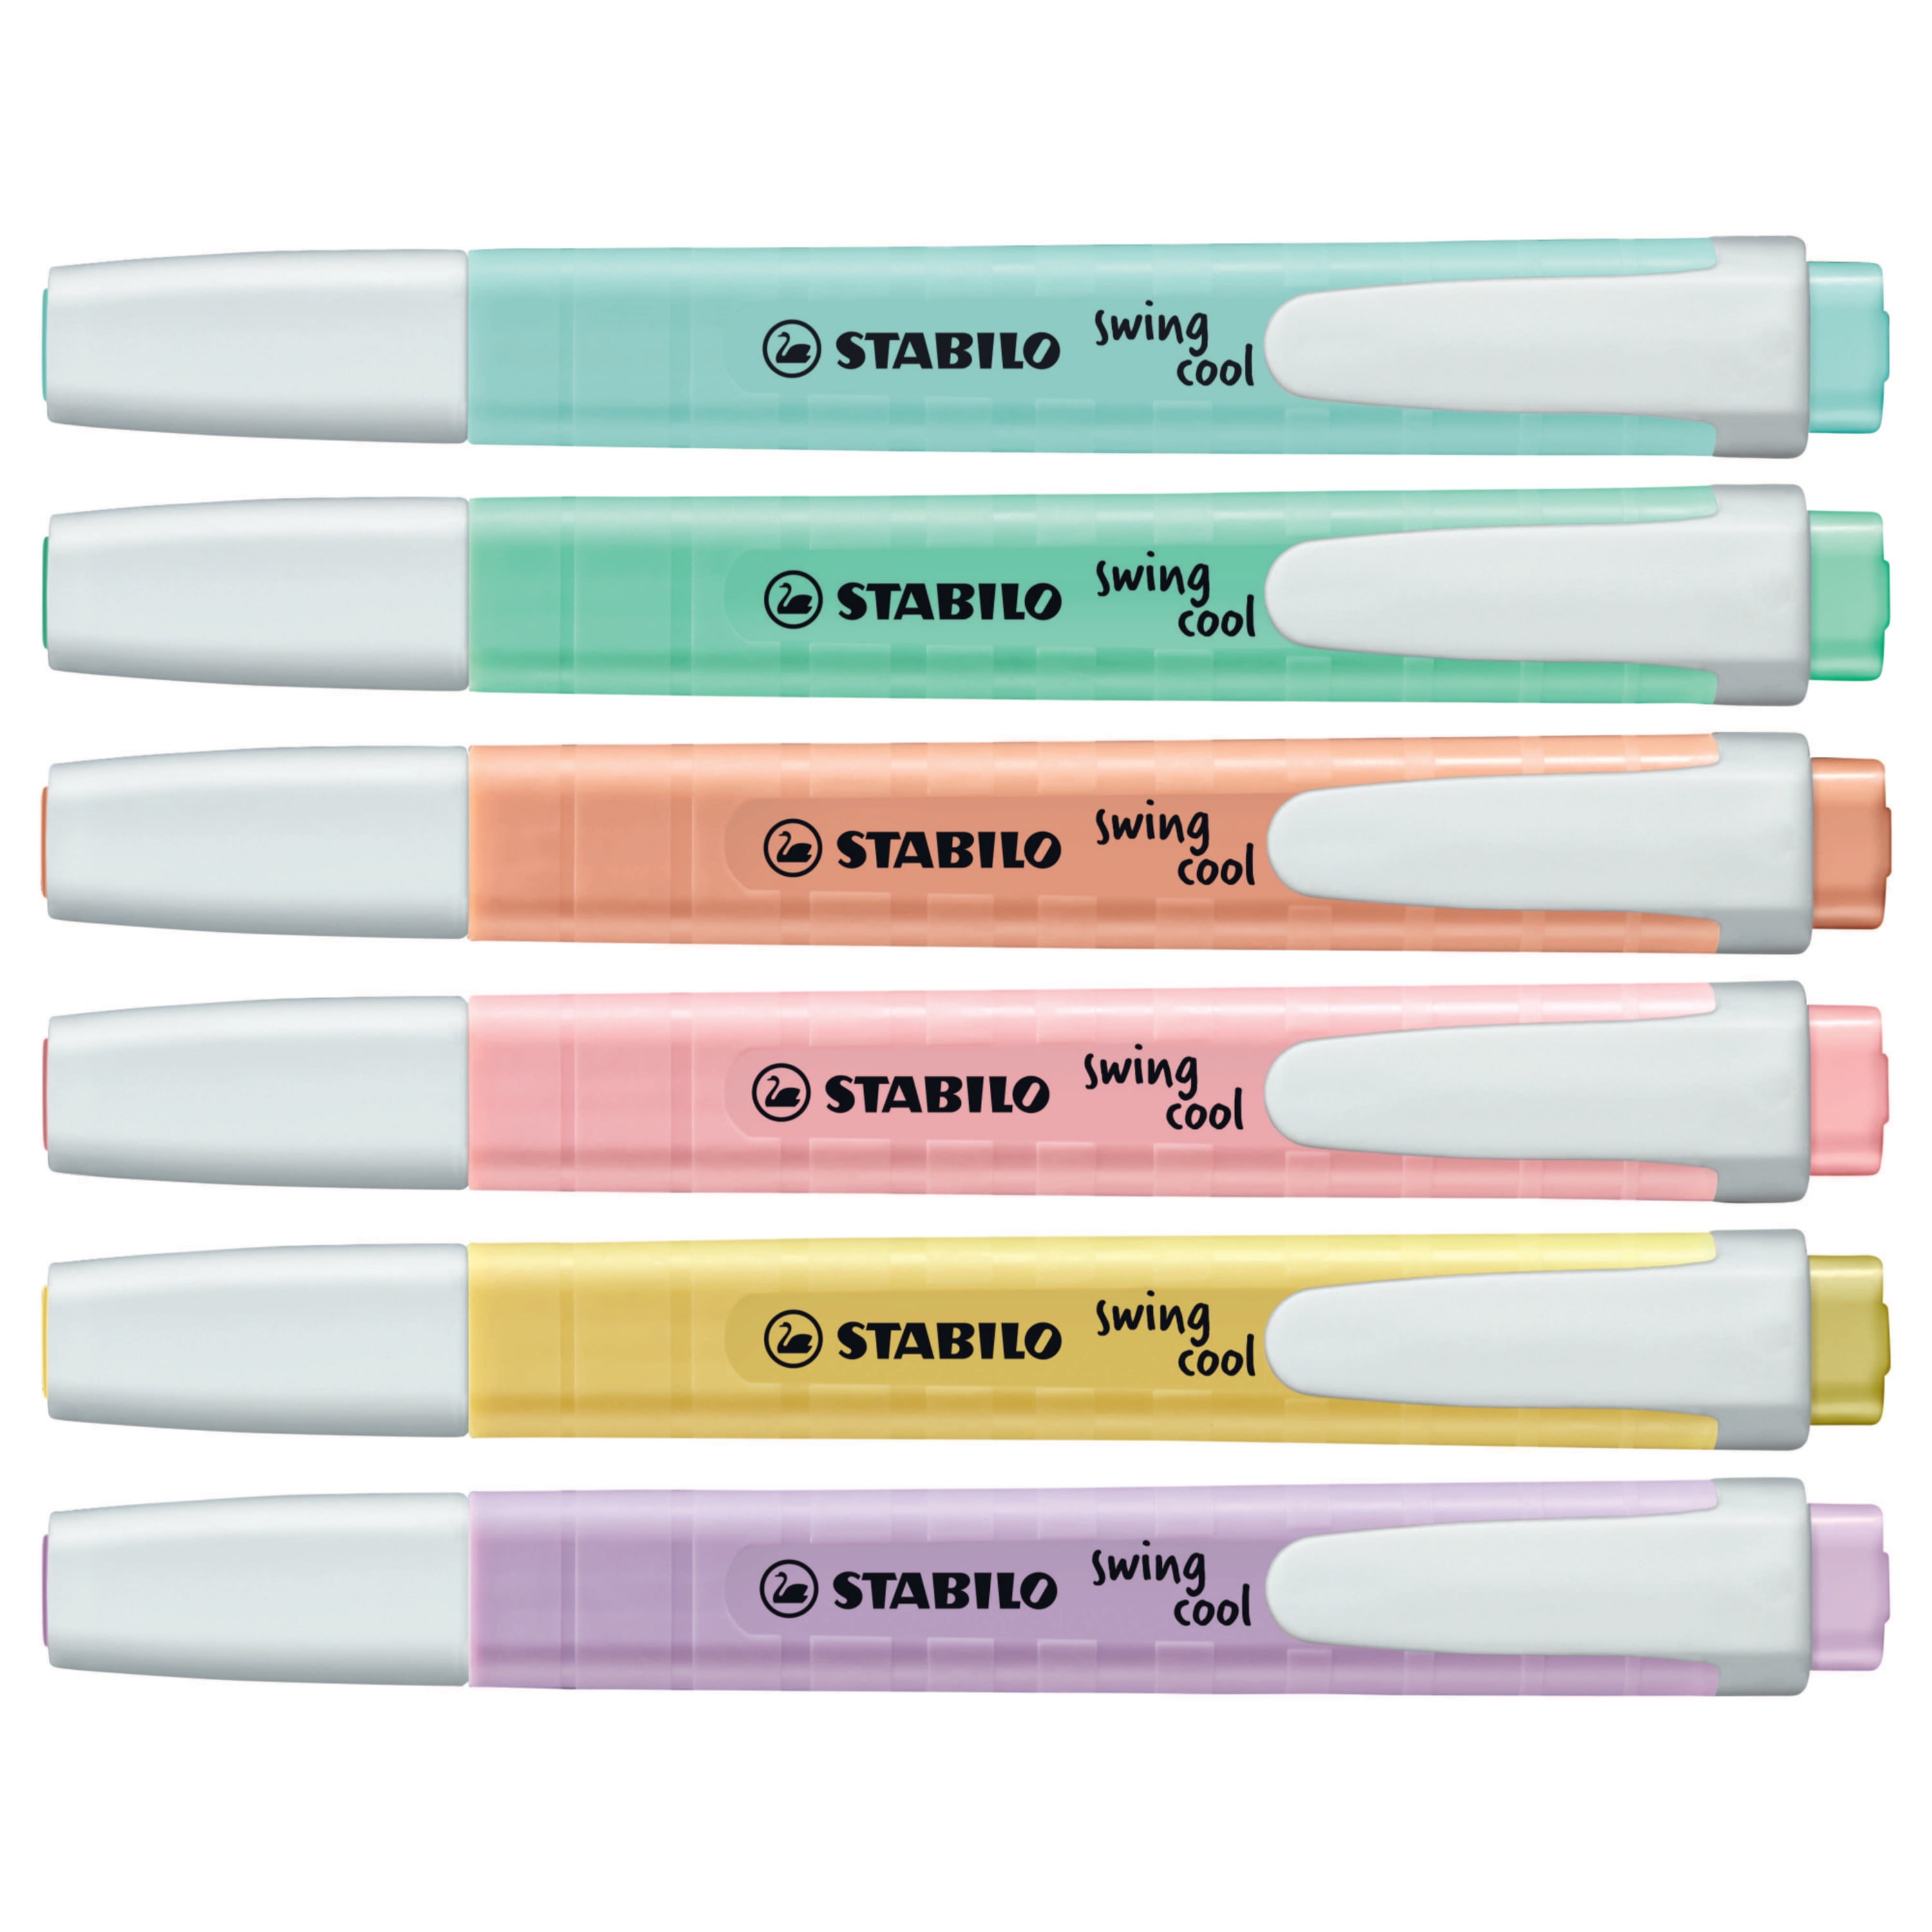 STABILO Swing Cool Highlighter Pen Pastel (Stationery Sunday Post)